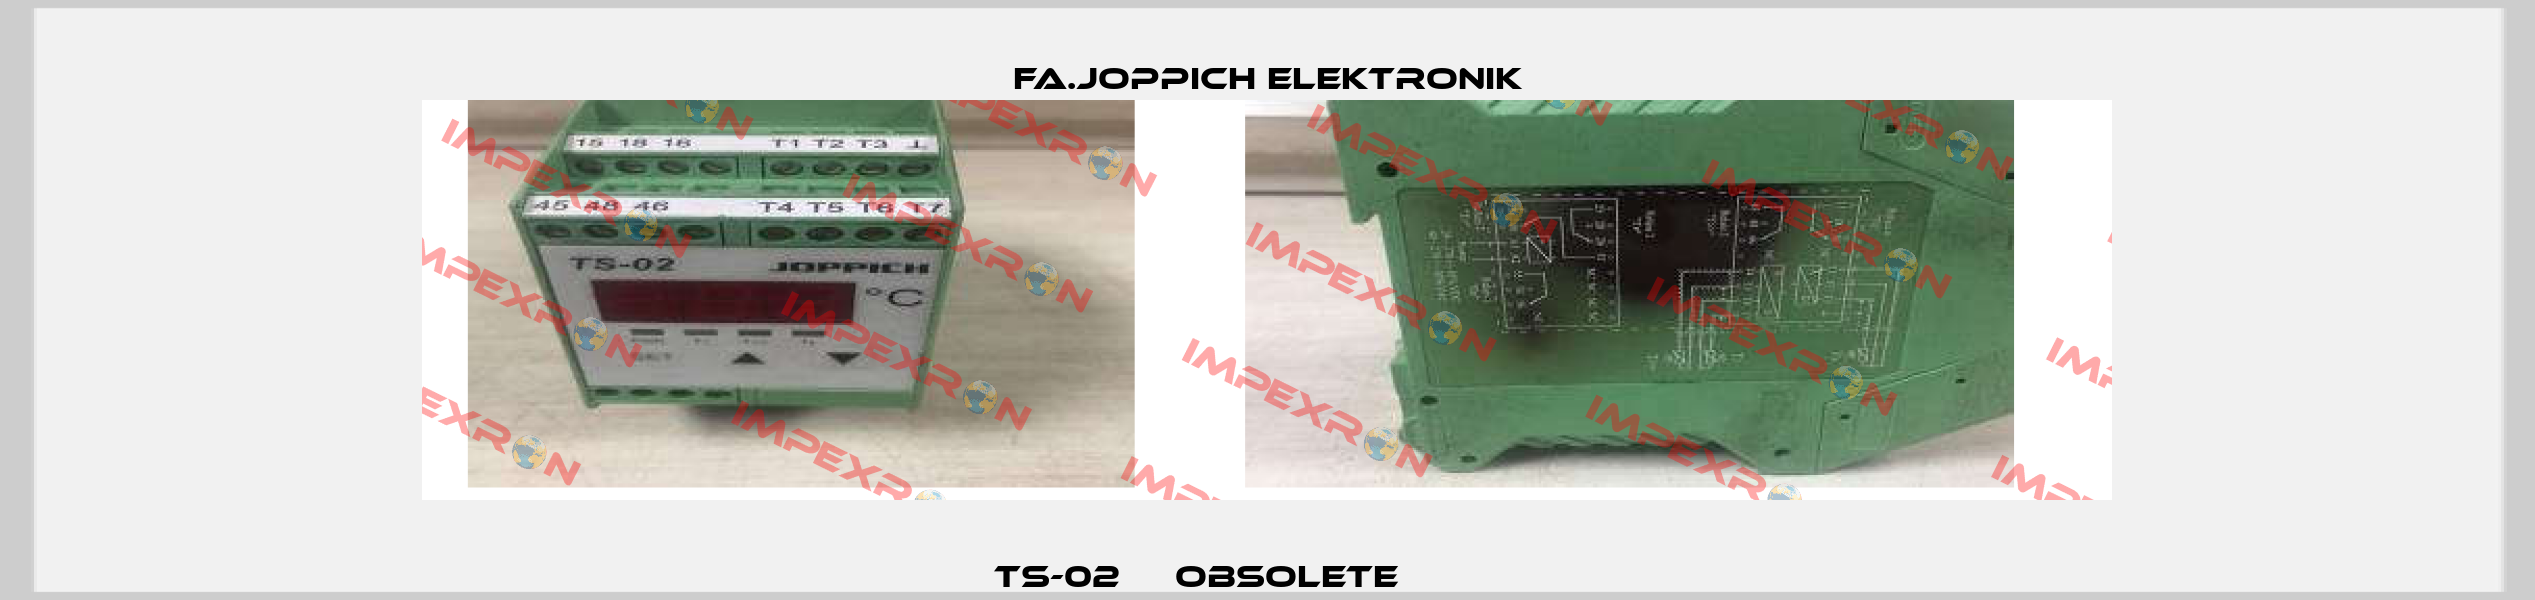  TS-02     obsolete               Fa.Joppich Elektronik